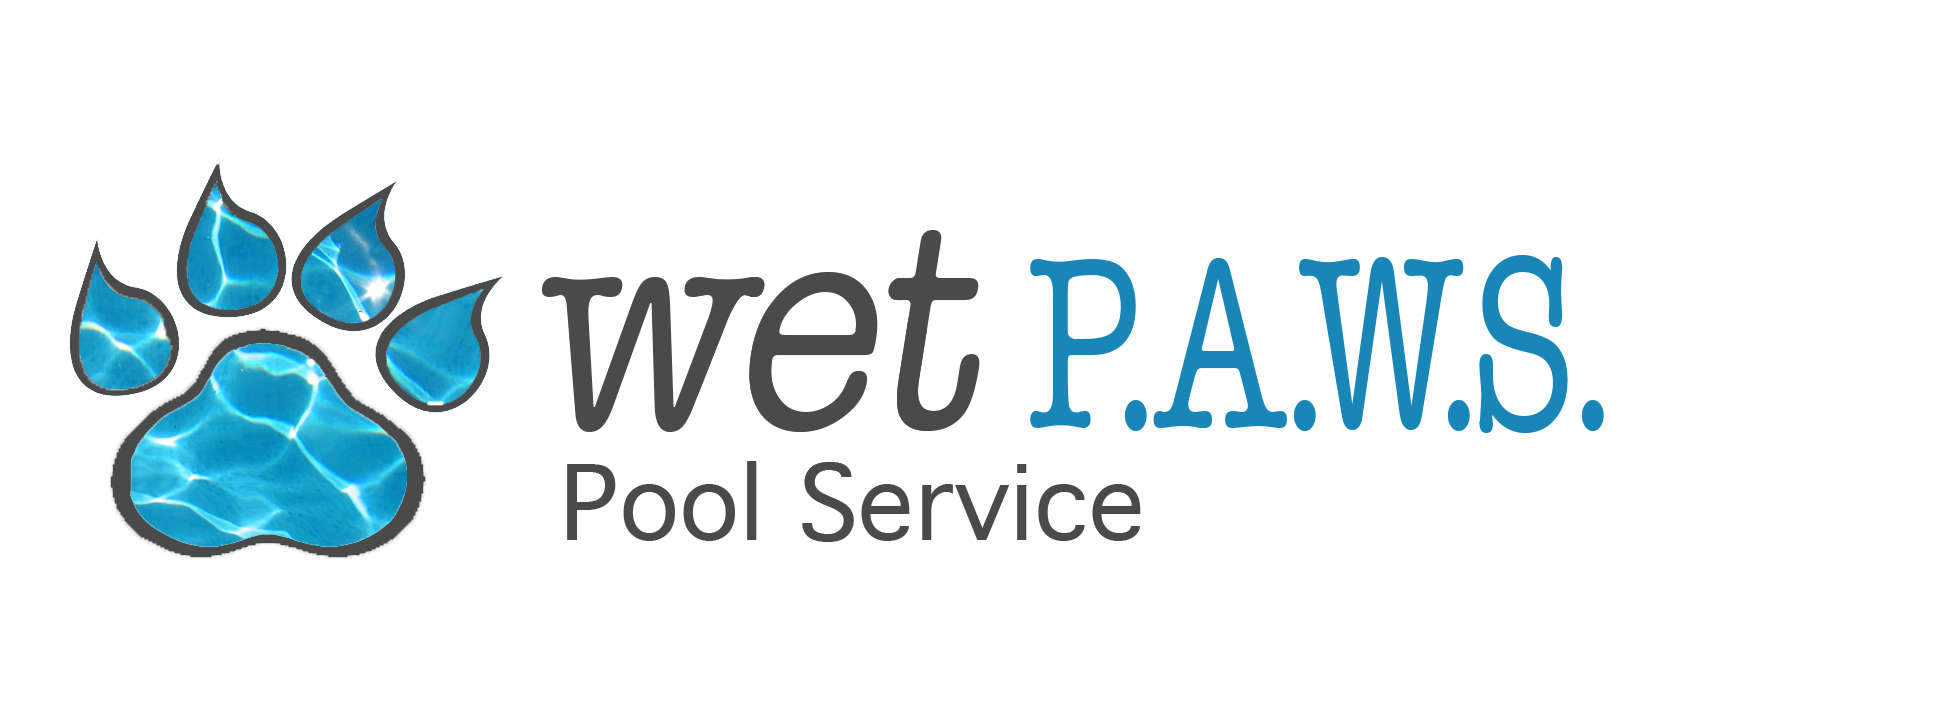 Wet PAWS Pool Service Logo